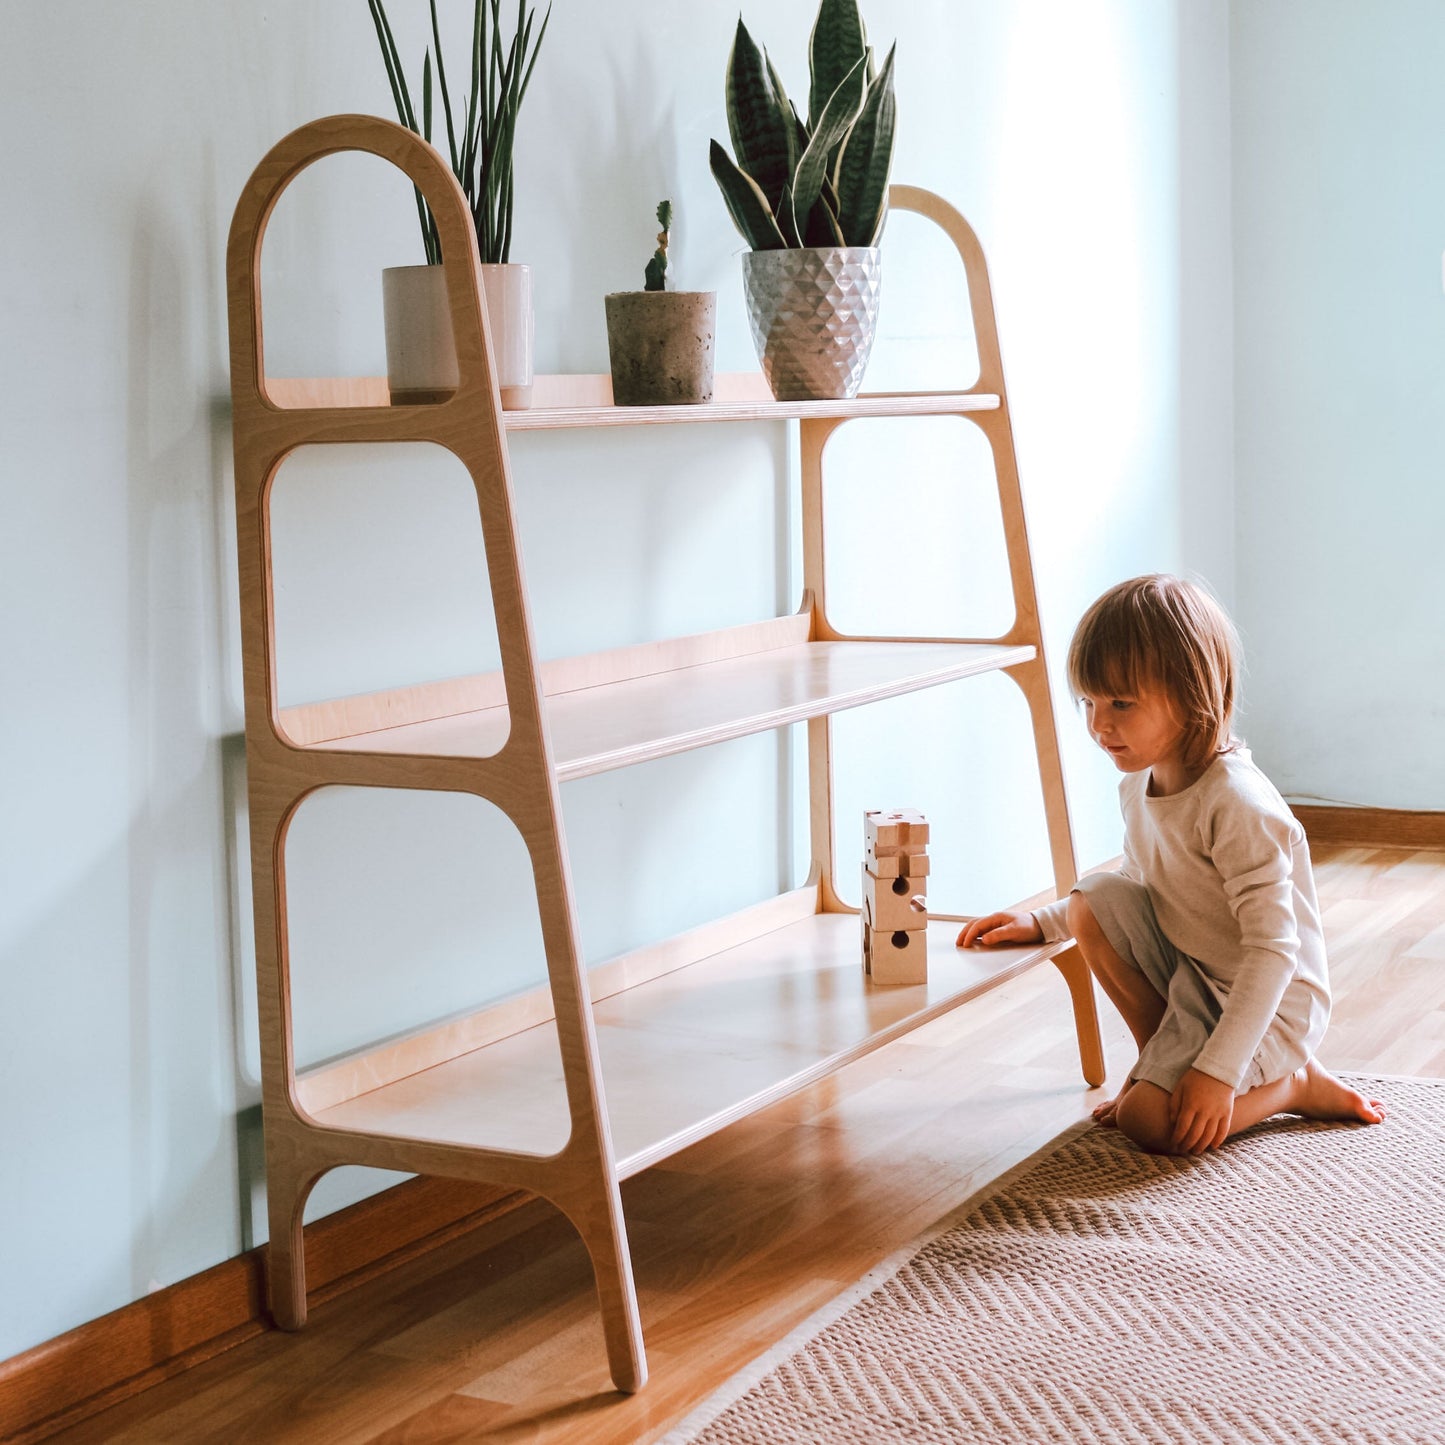 OUTLET The WoodU Shelf - 3 shelves